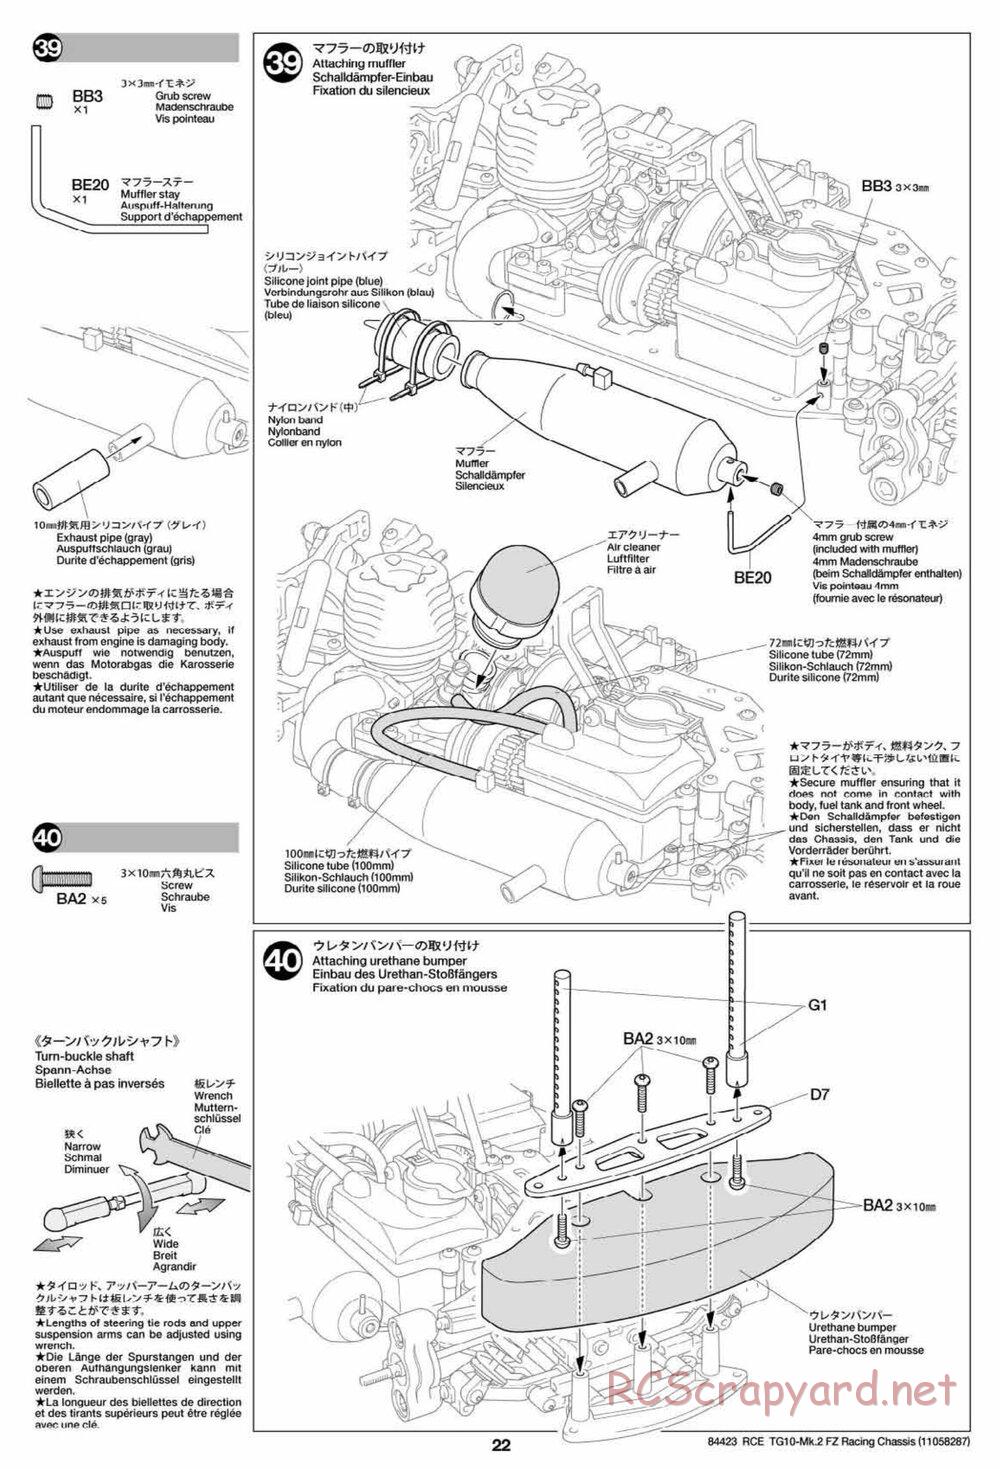 Tamiya - TG10 Mk.2 FZ Racing Chassis - Manual - Page 22